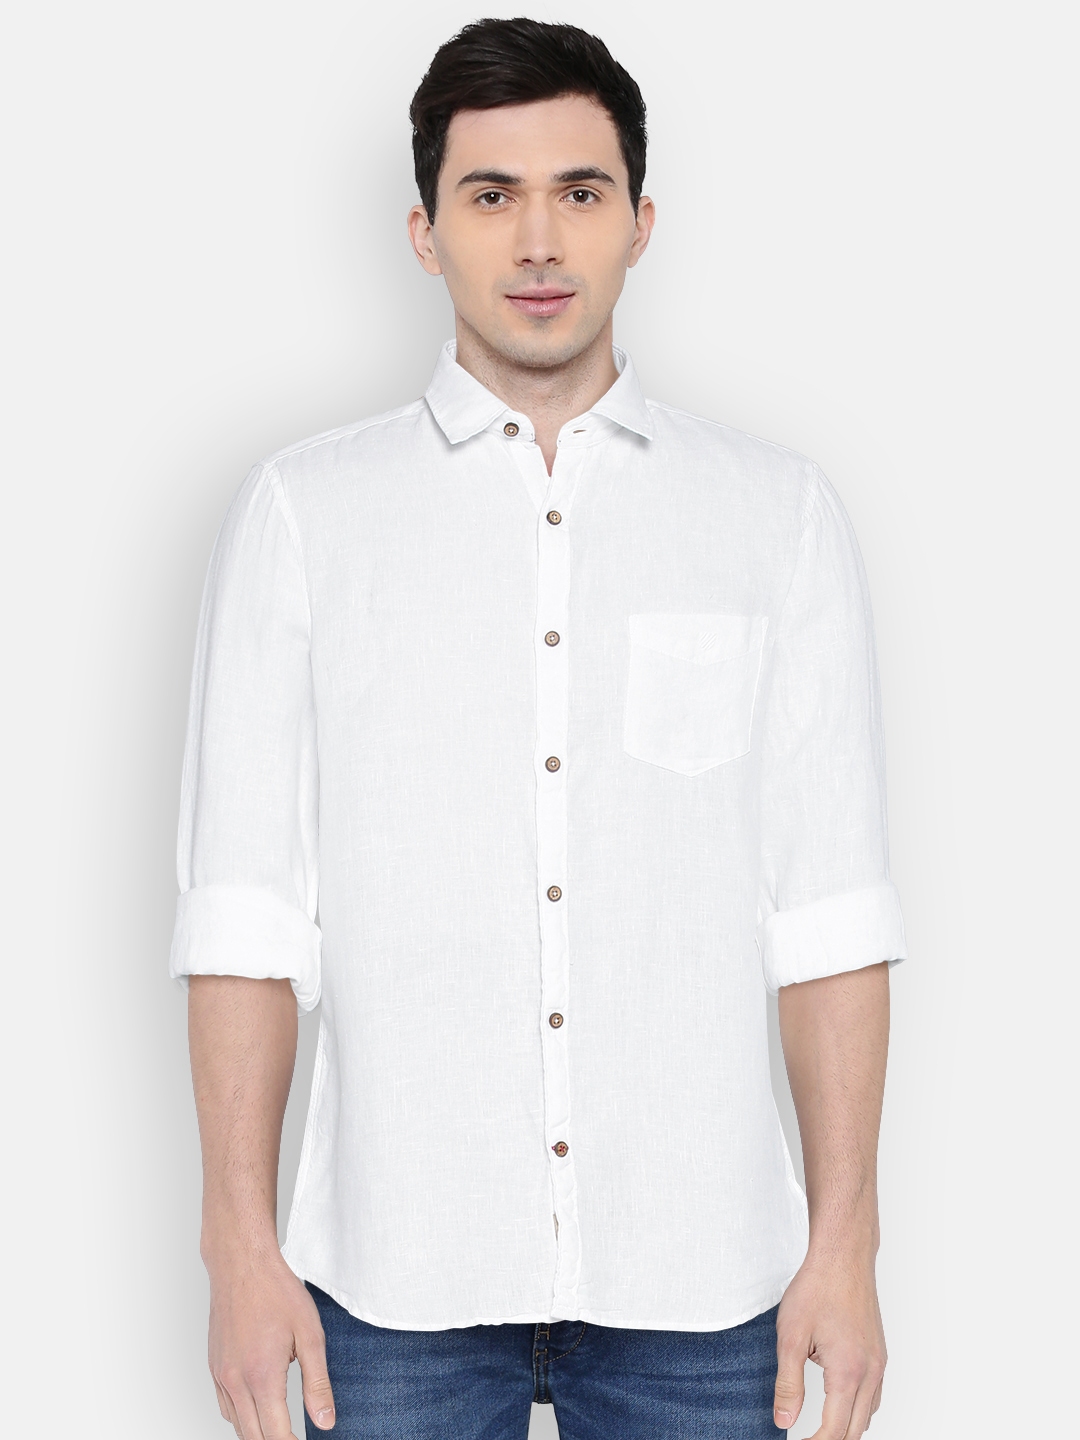 j hampstead white shirt